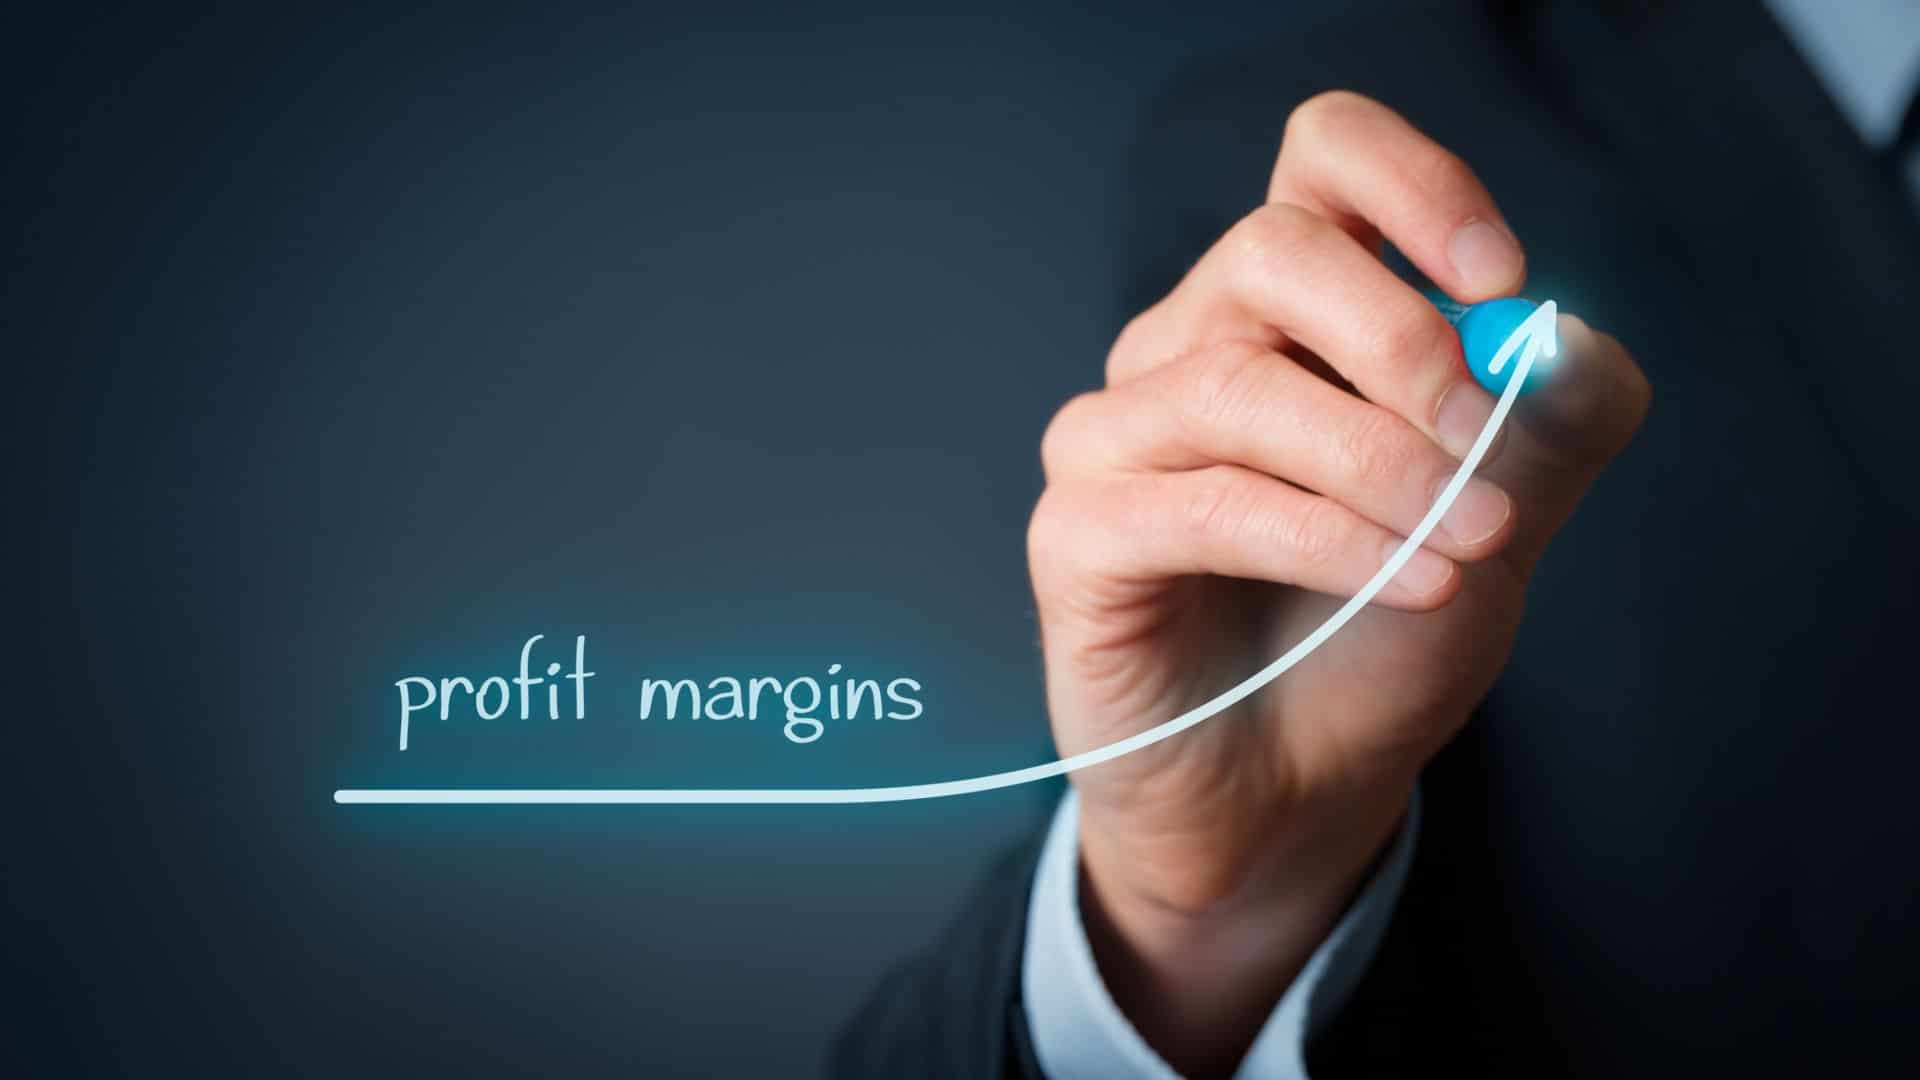 profit margins for a t-shirt business